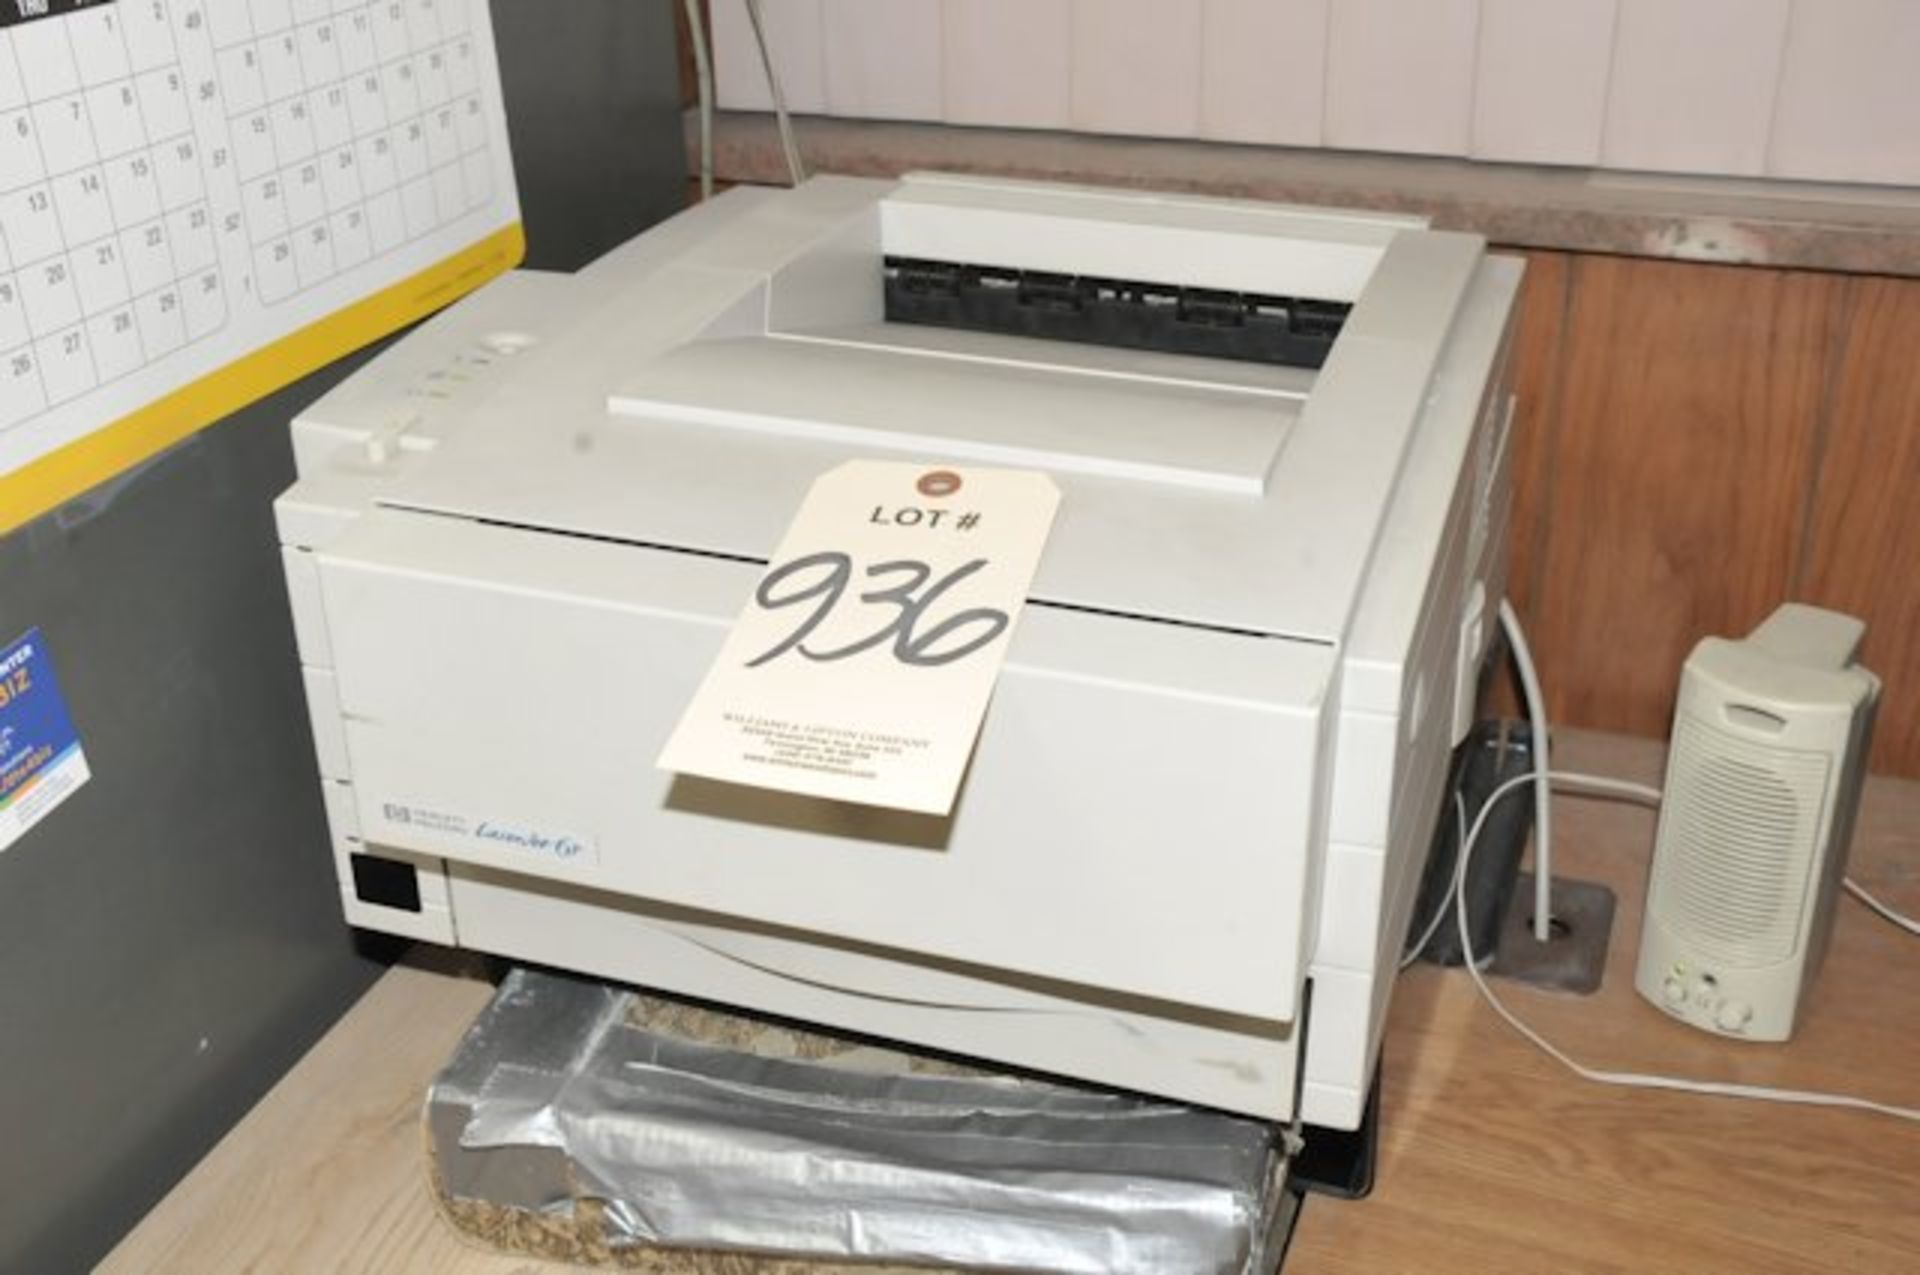 HEWLETT PACKARD Laserjet 6p Printer